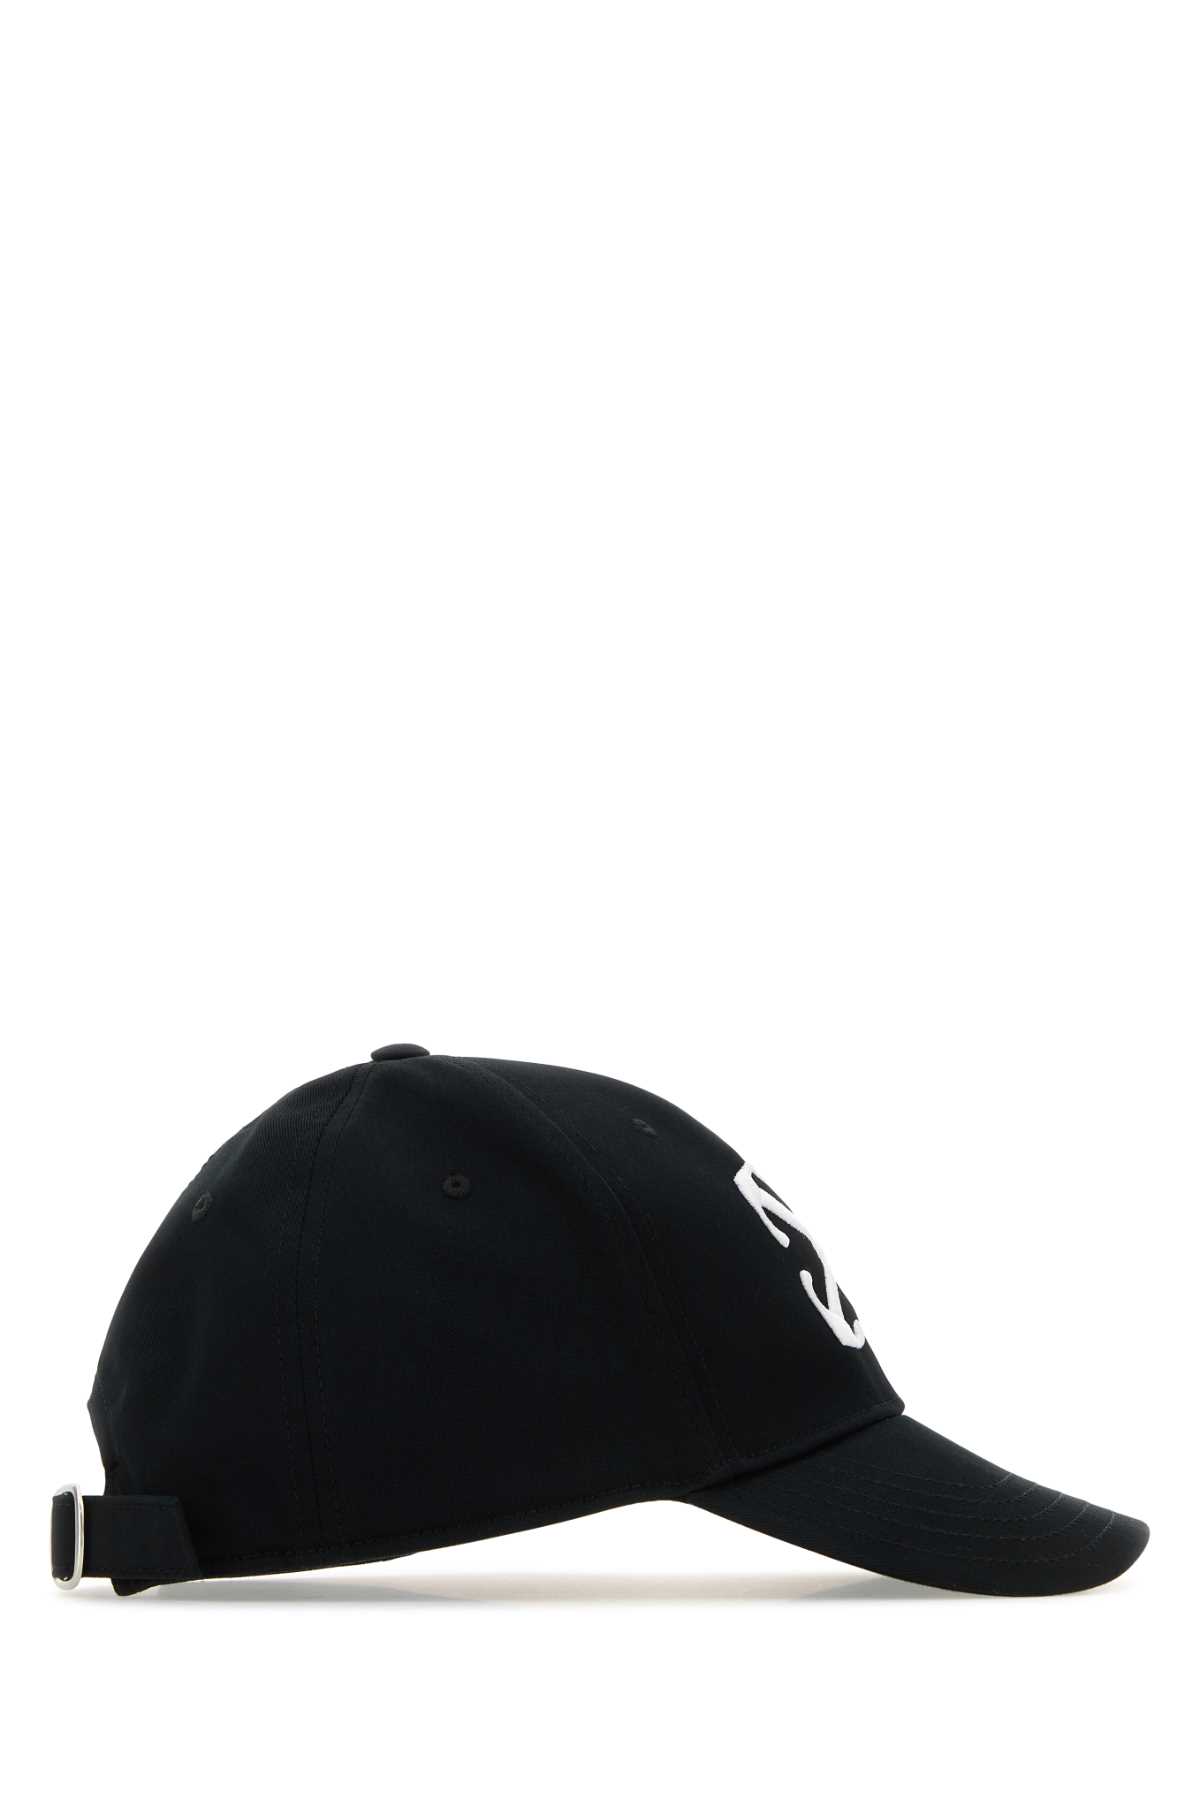 OFF-WHITE BLACK COTTON BASEBALL CAP